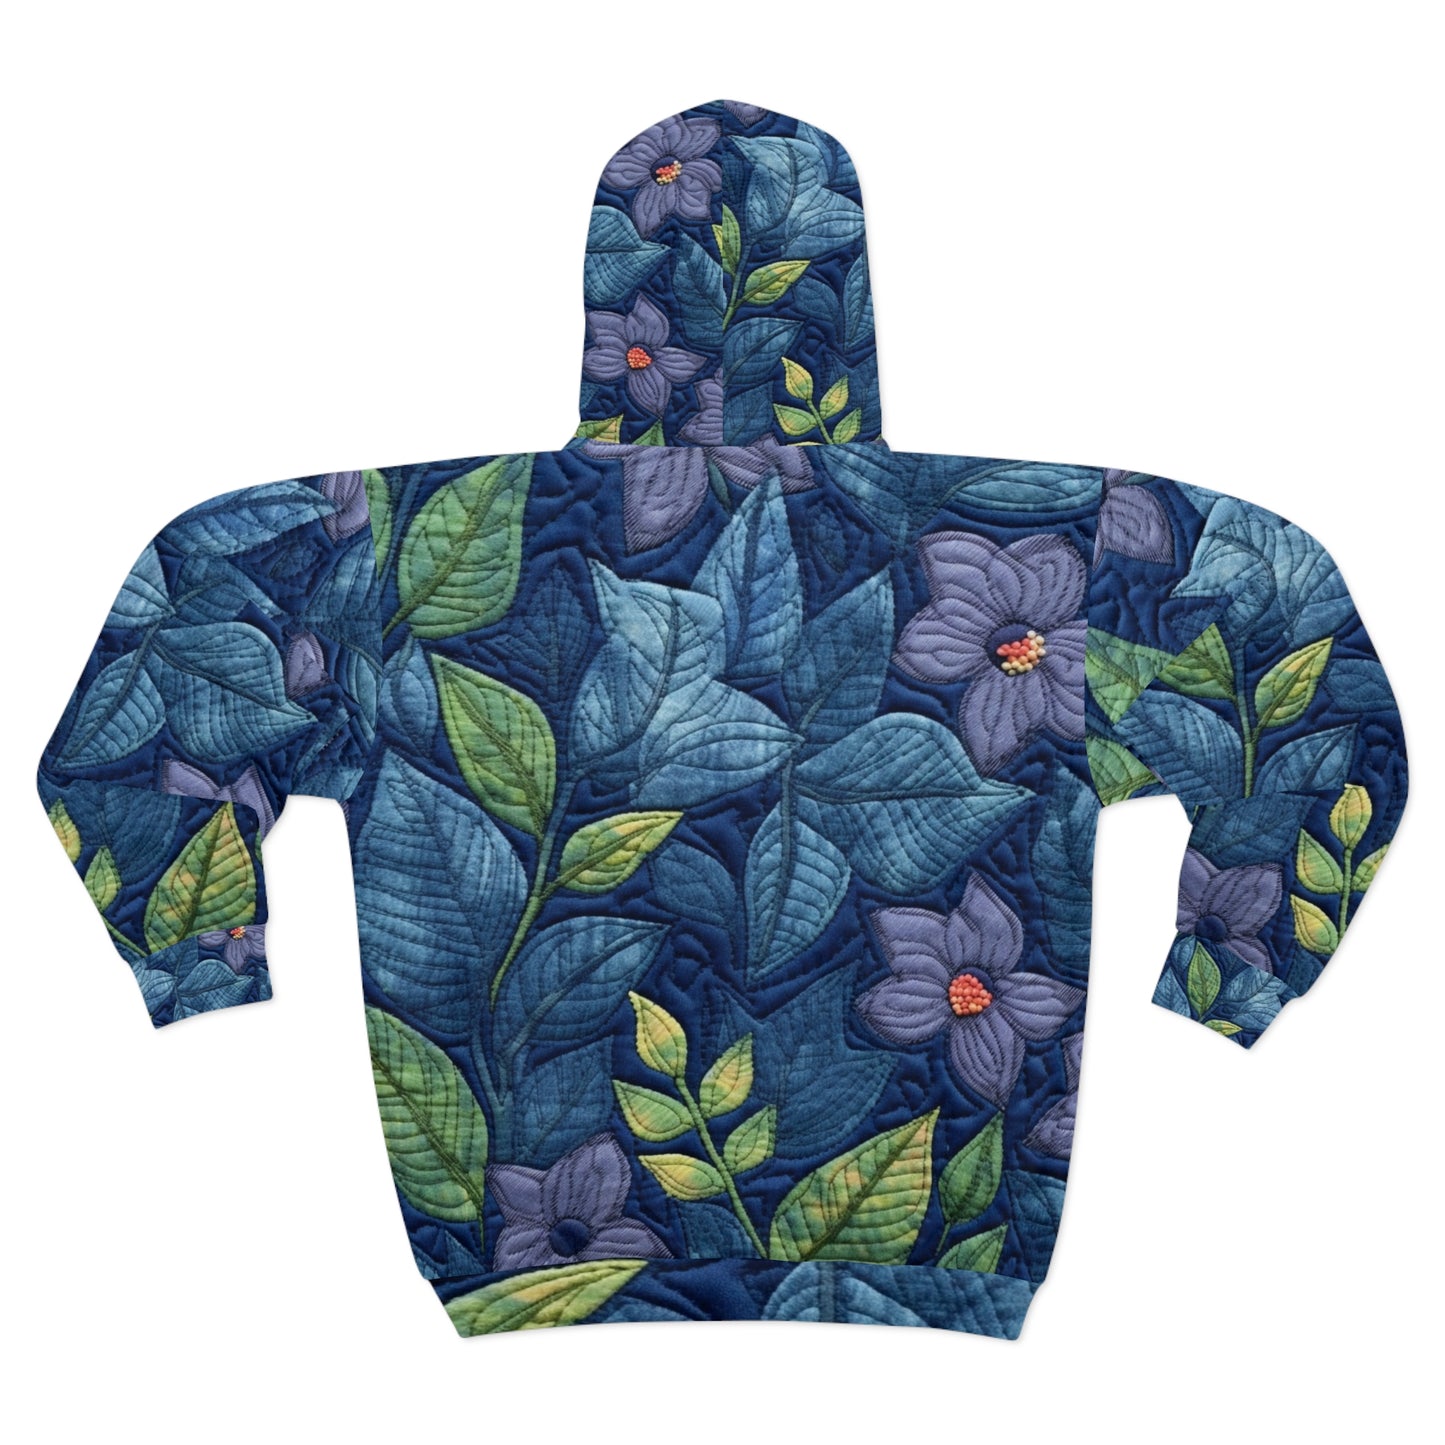 Floral Embroidery Blue: Denim-Inspired, Artisan-Crafted Flower Design - Unisex Zip Hoodie (AOP)